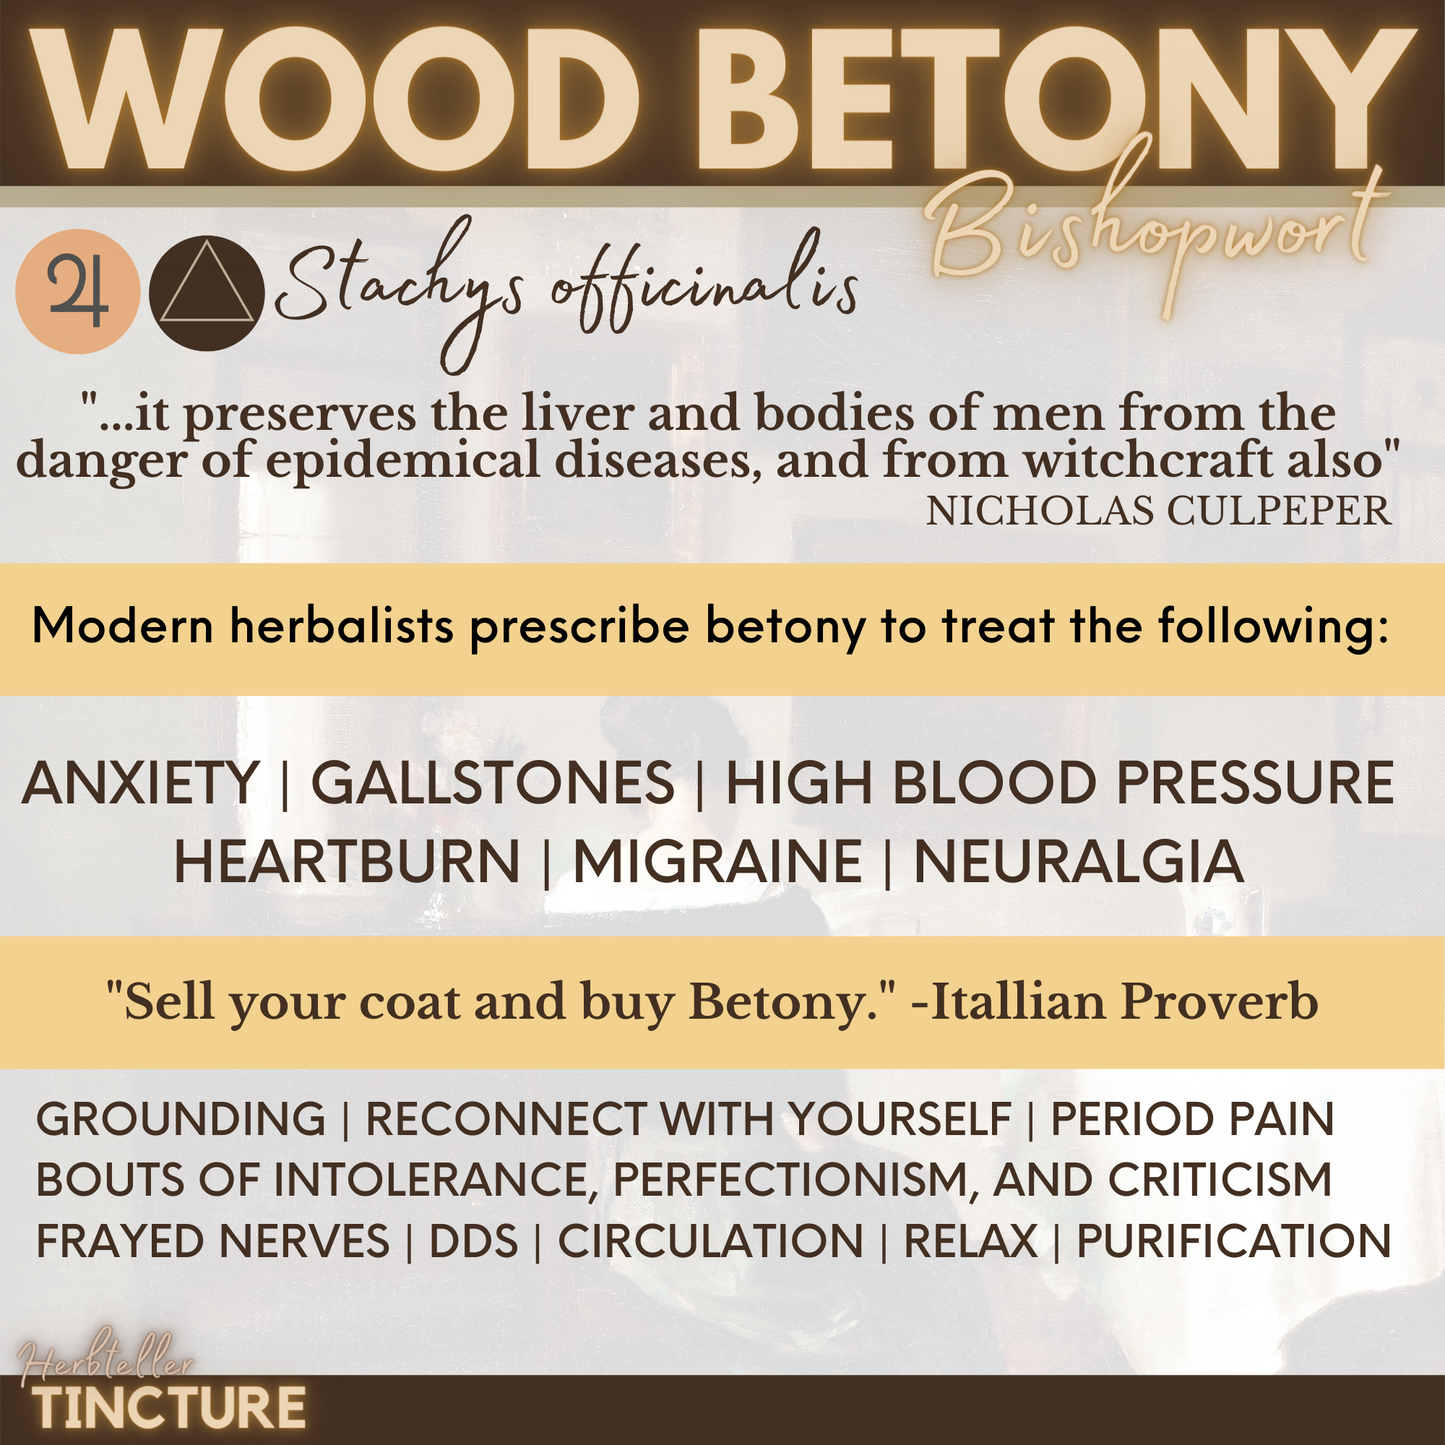 Wood Betony Herbal Tincture - Original City Apothecary